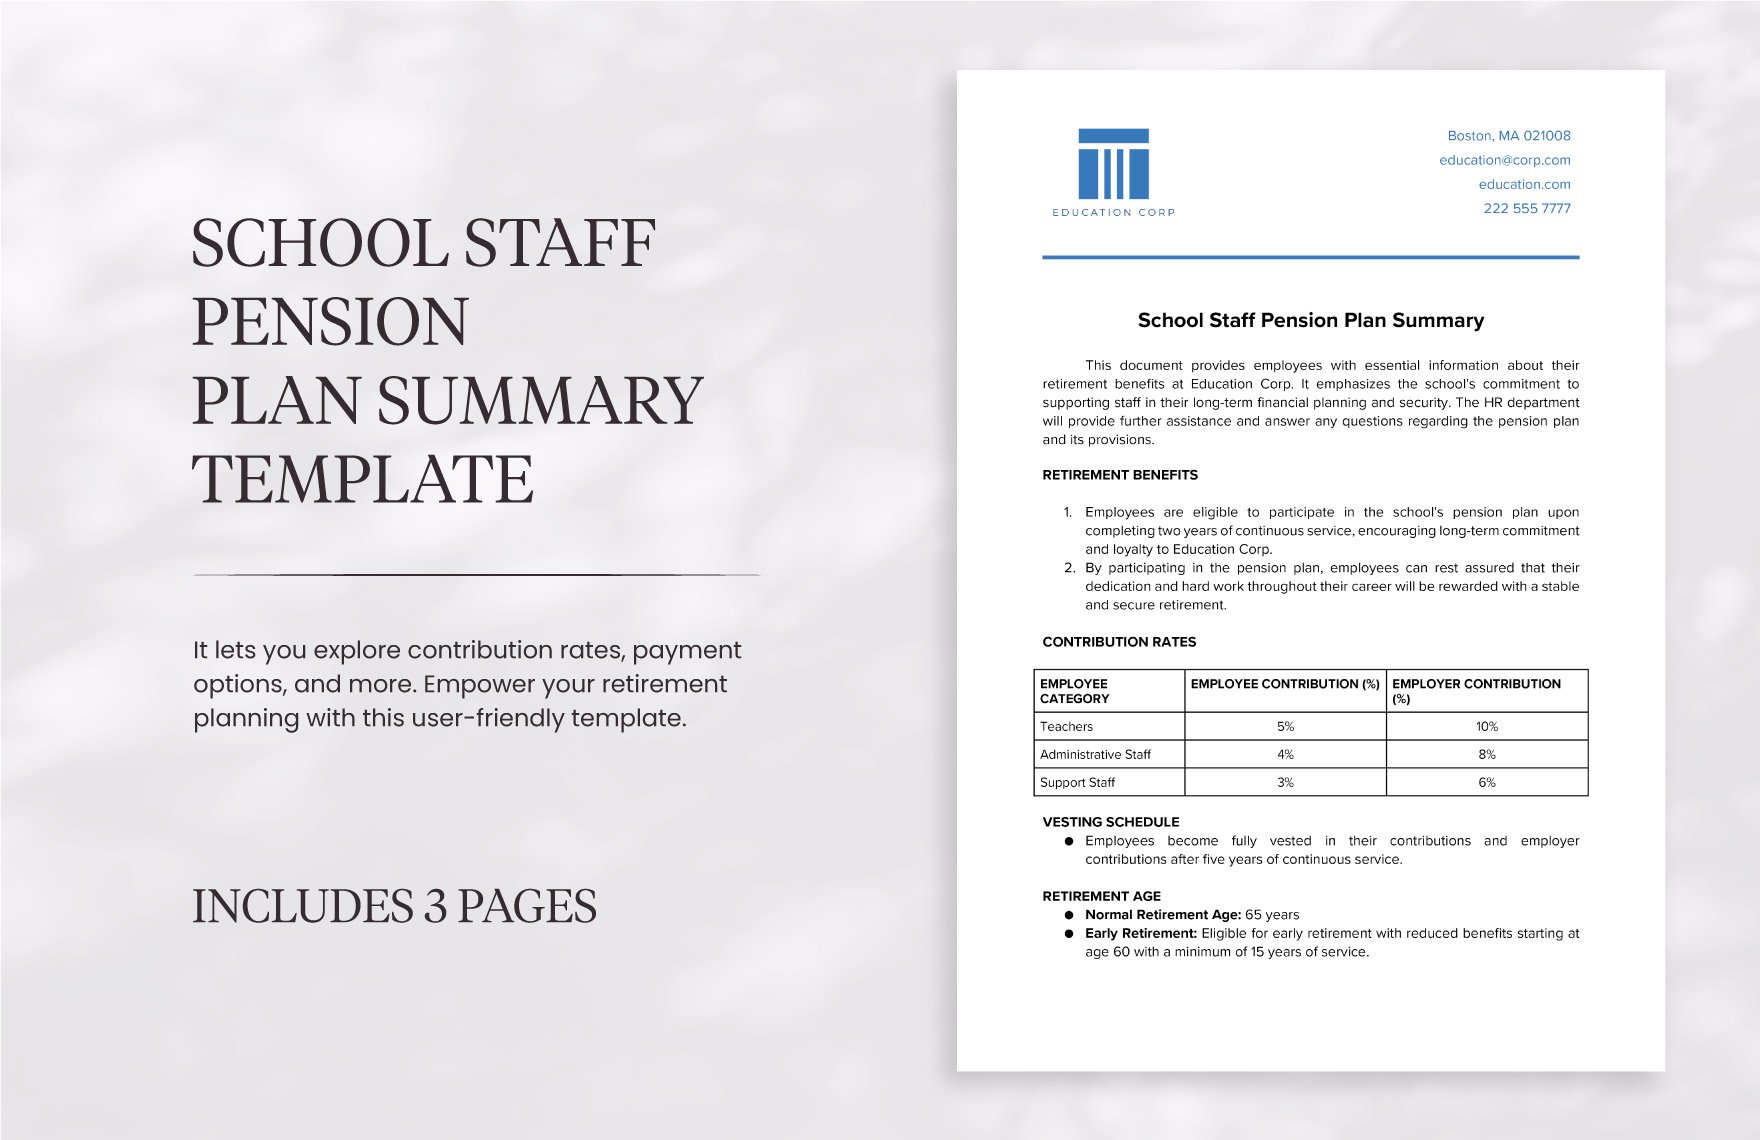 School Staff Pension Plan Summary Template